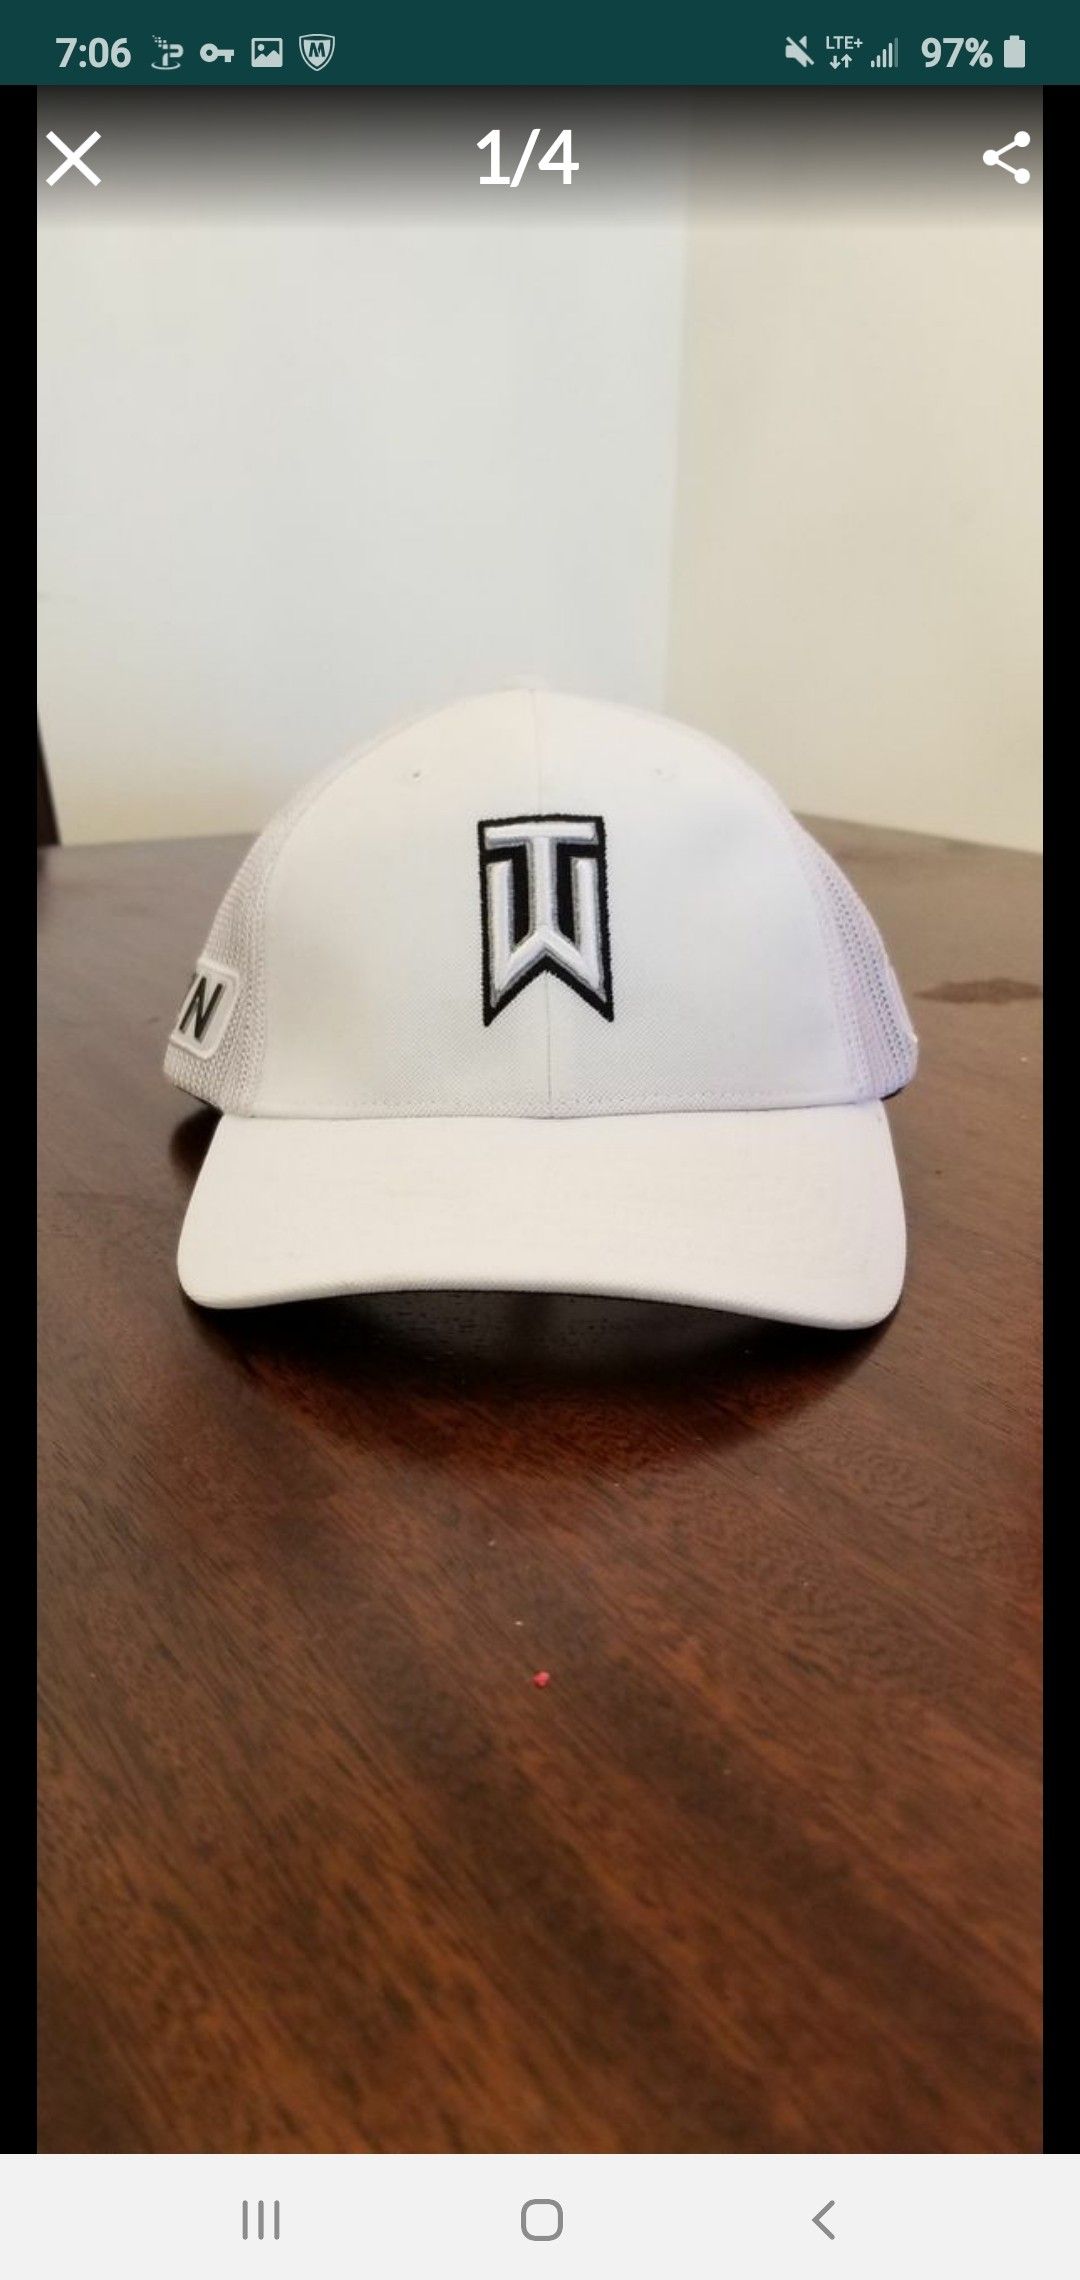 Brand new tiger woods hat